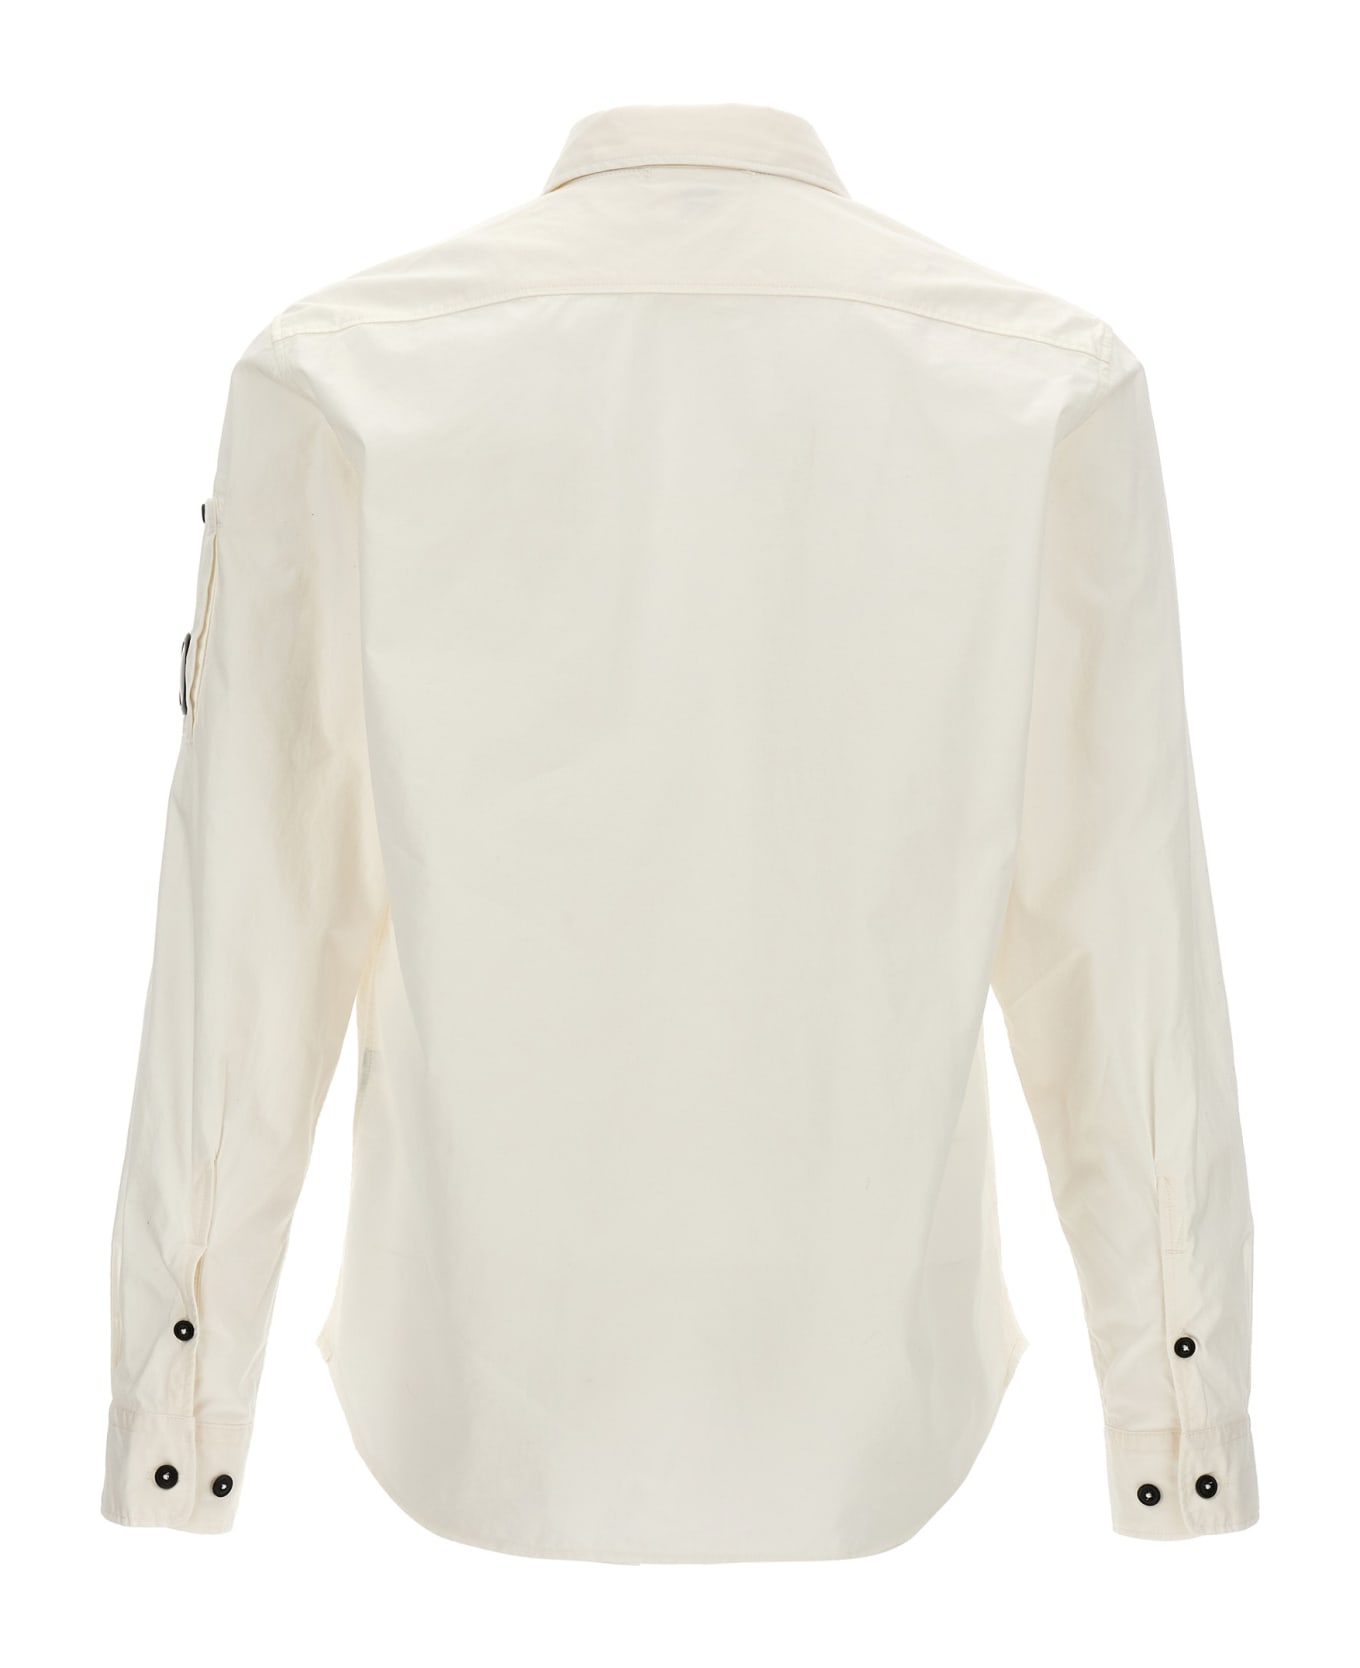 C.P. Company Gabardine Shirt With Logo Badge - White シャツ